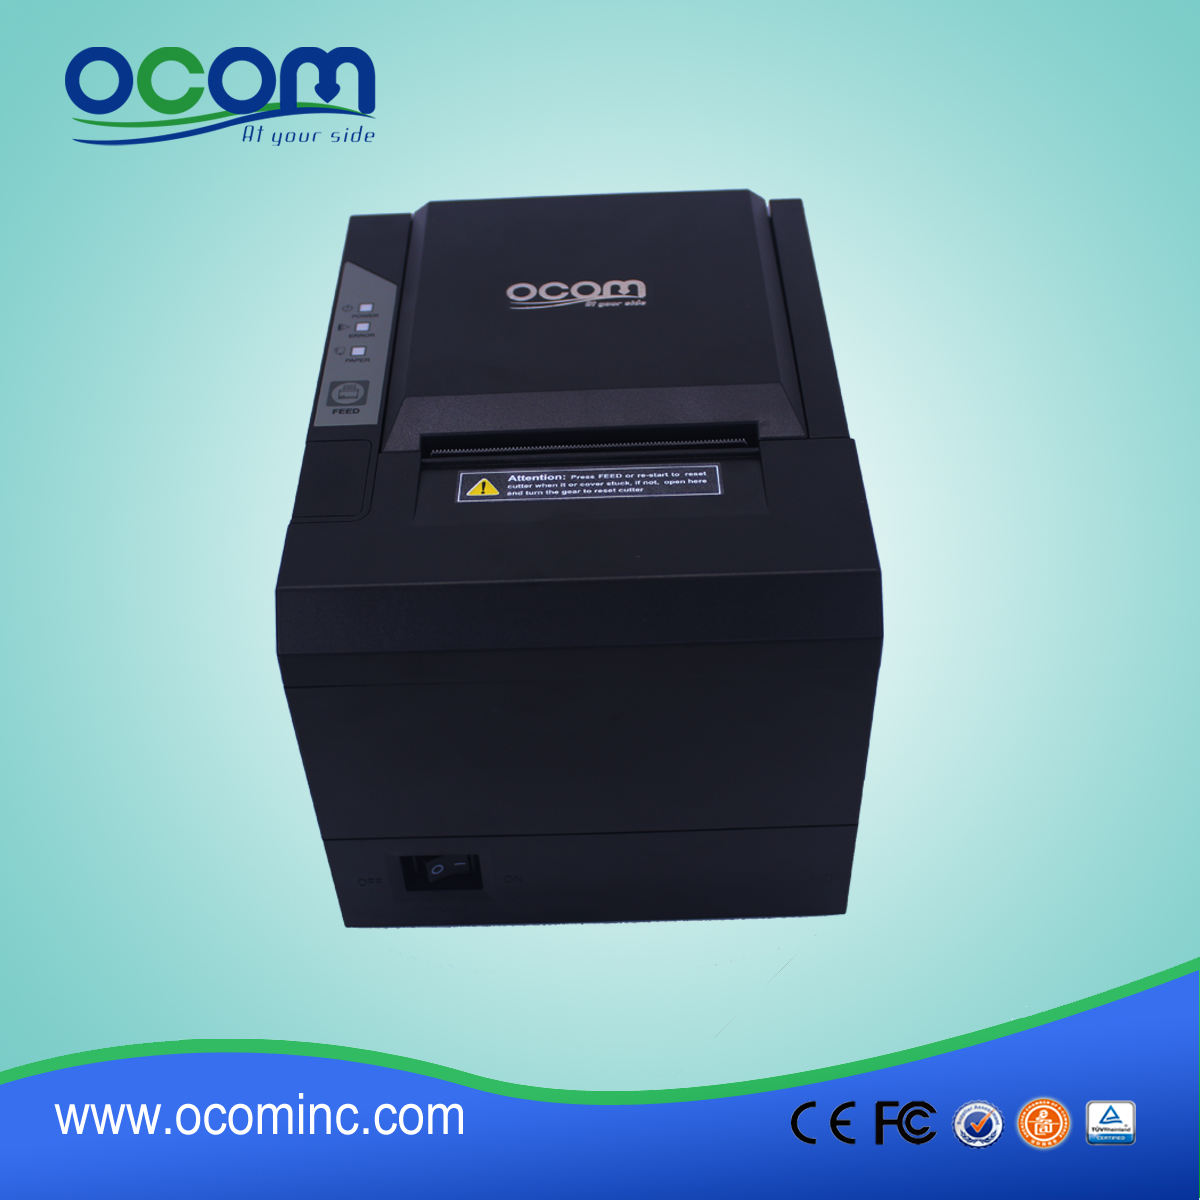 OCPP-80G-U Impresora de recibo térmica confiable de 80 mm con interfaz USB